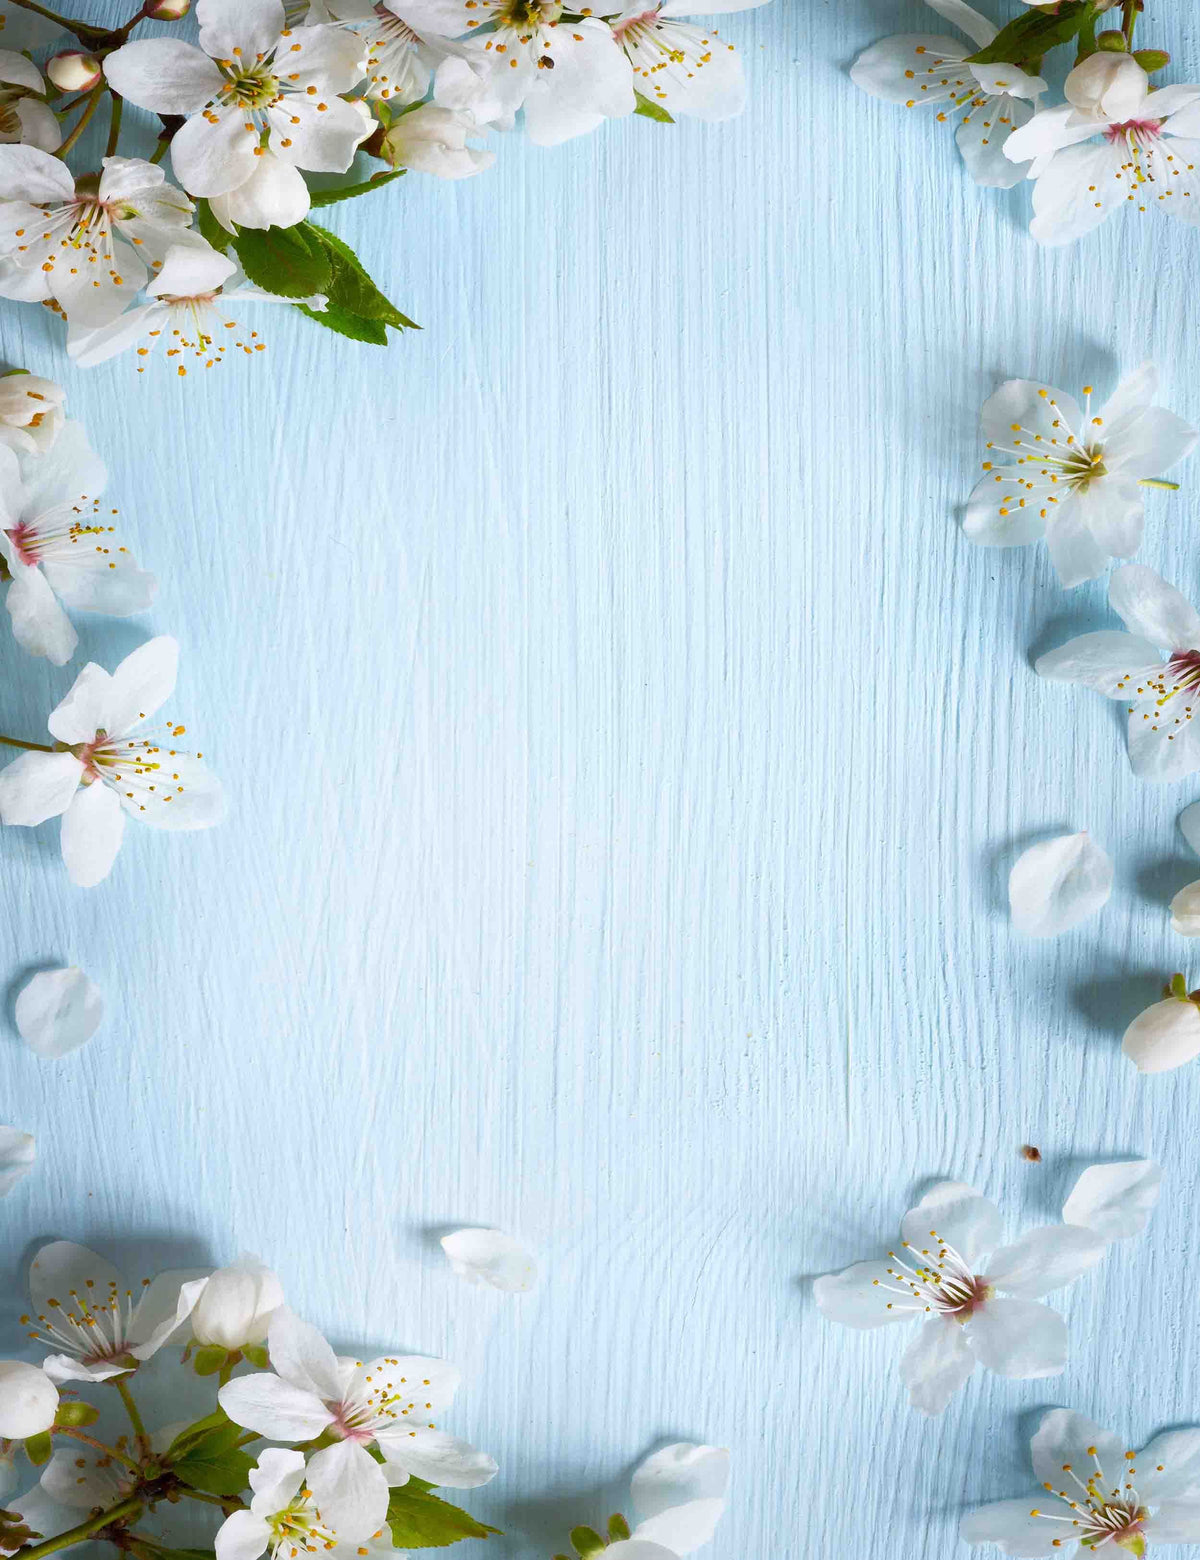 White Pear flower Sprinkle Around Sky Blue Wood Photography Backdrop Shopbackdrop